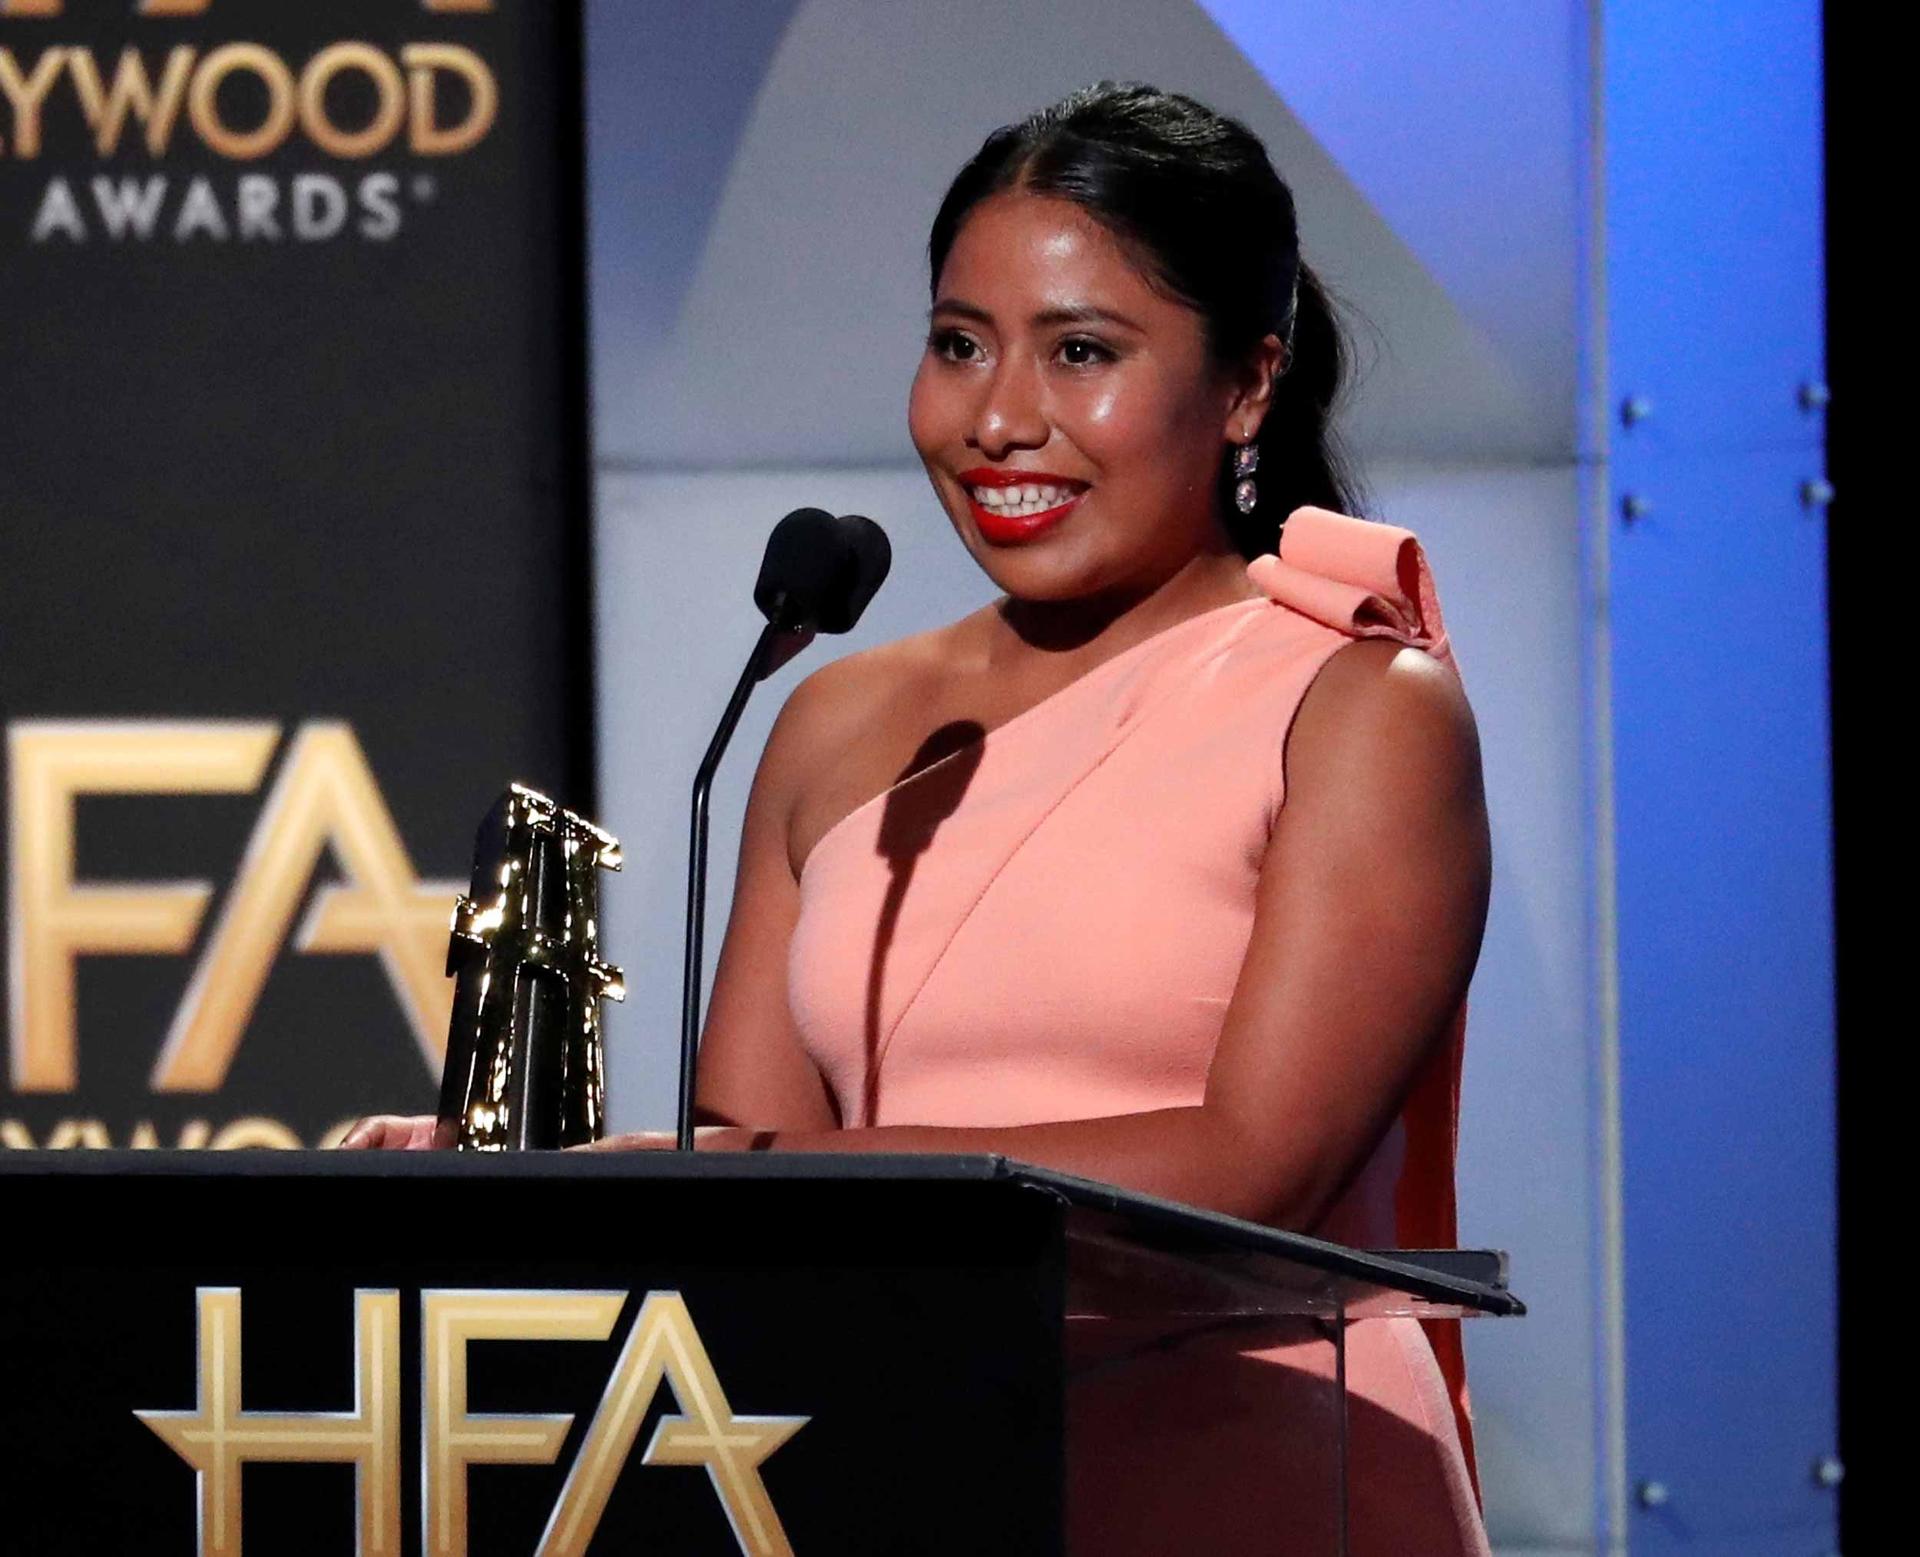 Yalitza Aparicio stands behind a podium holding the New Hollywood Award